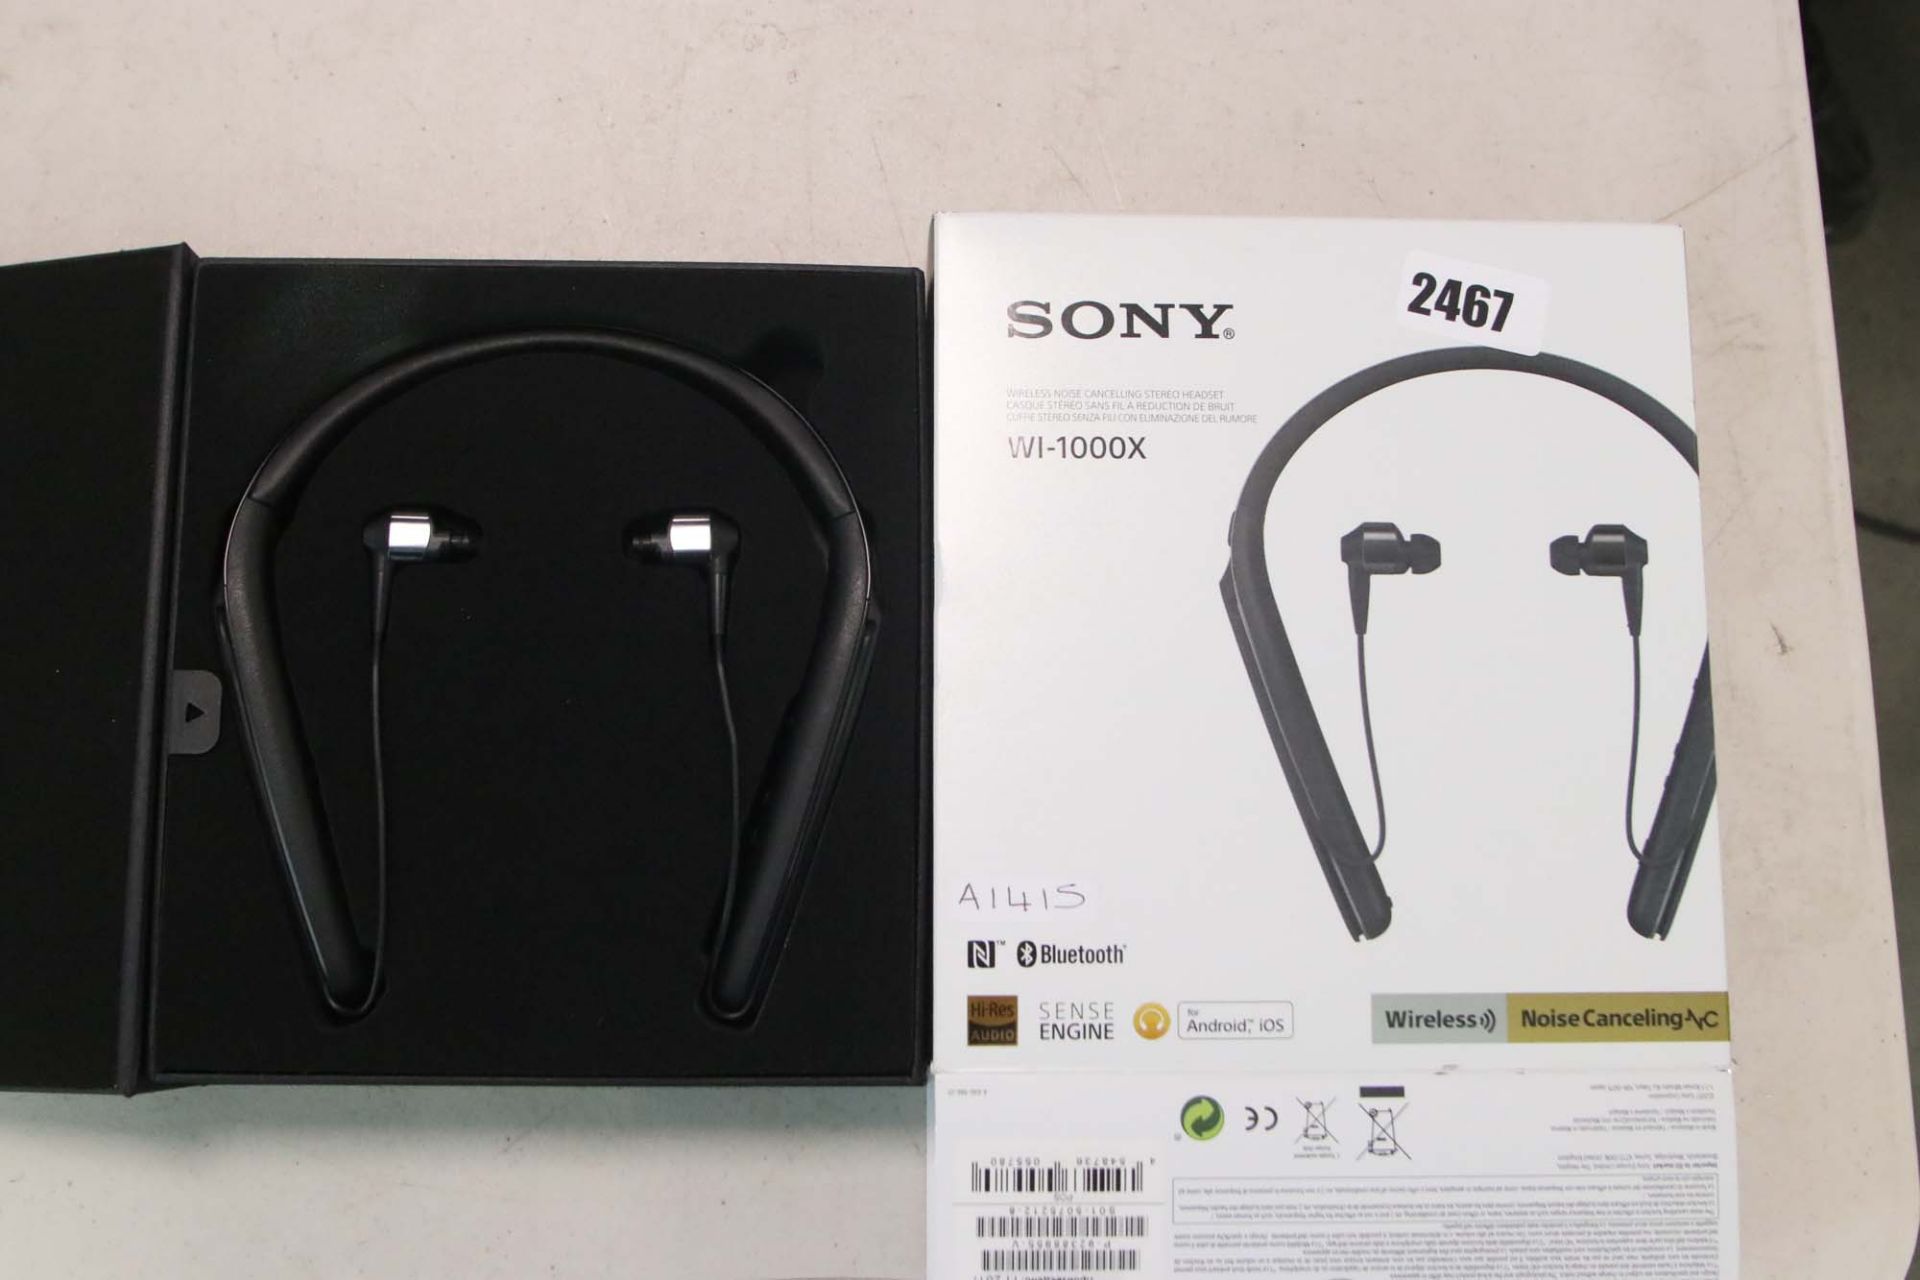 Sony WI-1000X bluetooth headset in box